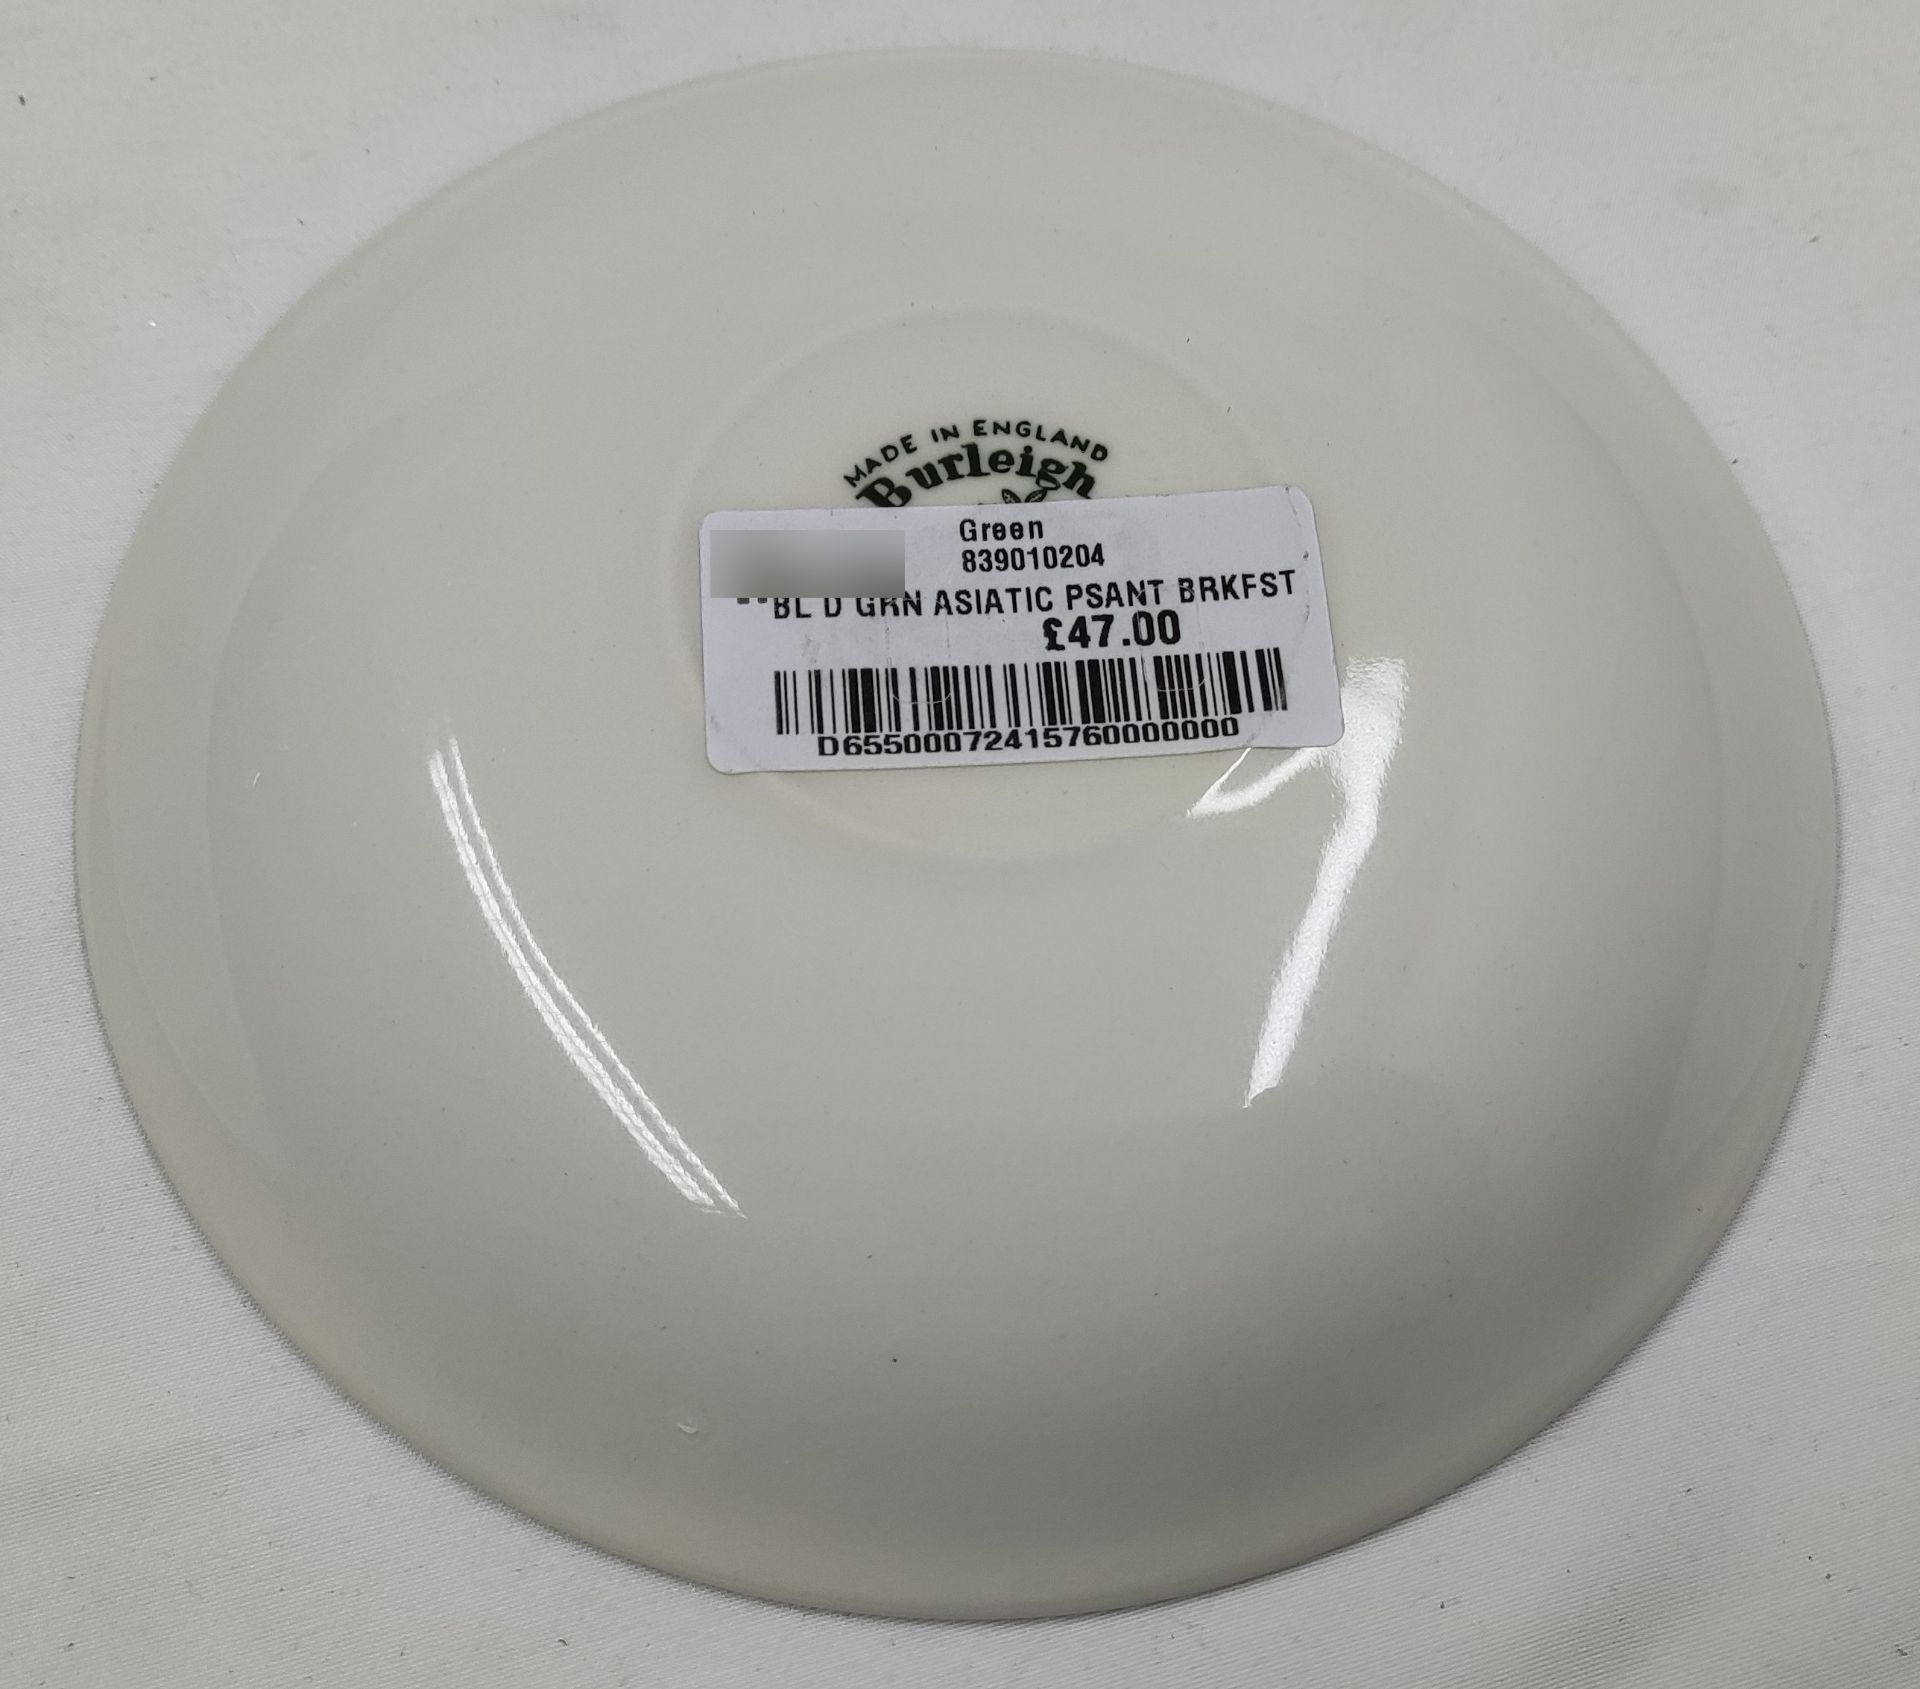 1 x BURLEIGH Dark Green Asiatic Pheasant Breakfast Saucer - New - RRP £47 - Ref: 7241576/HOC194/ - Image 6 of 6